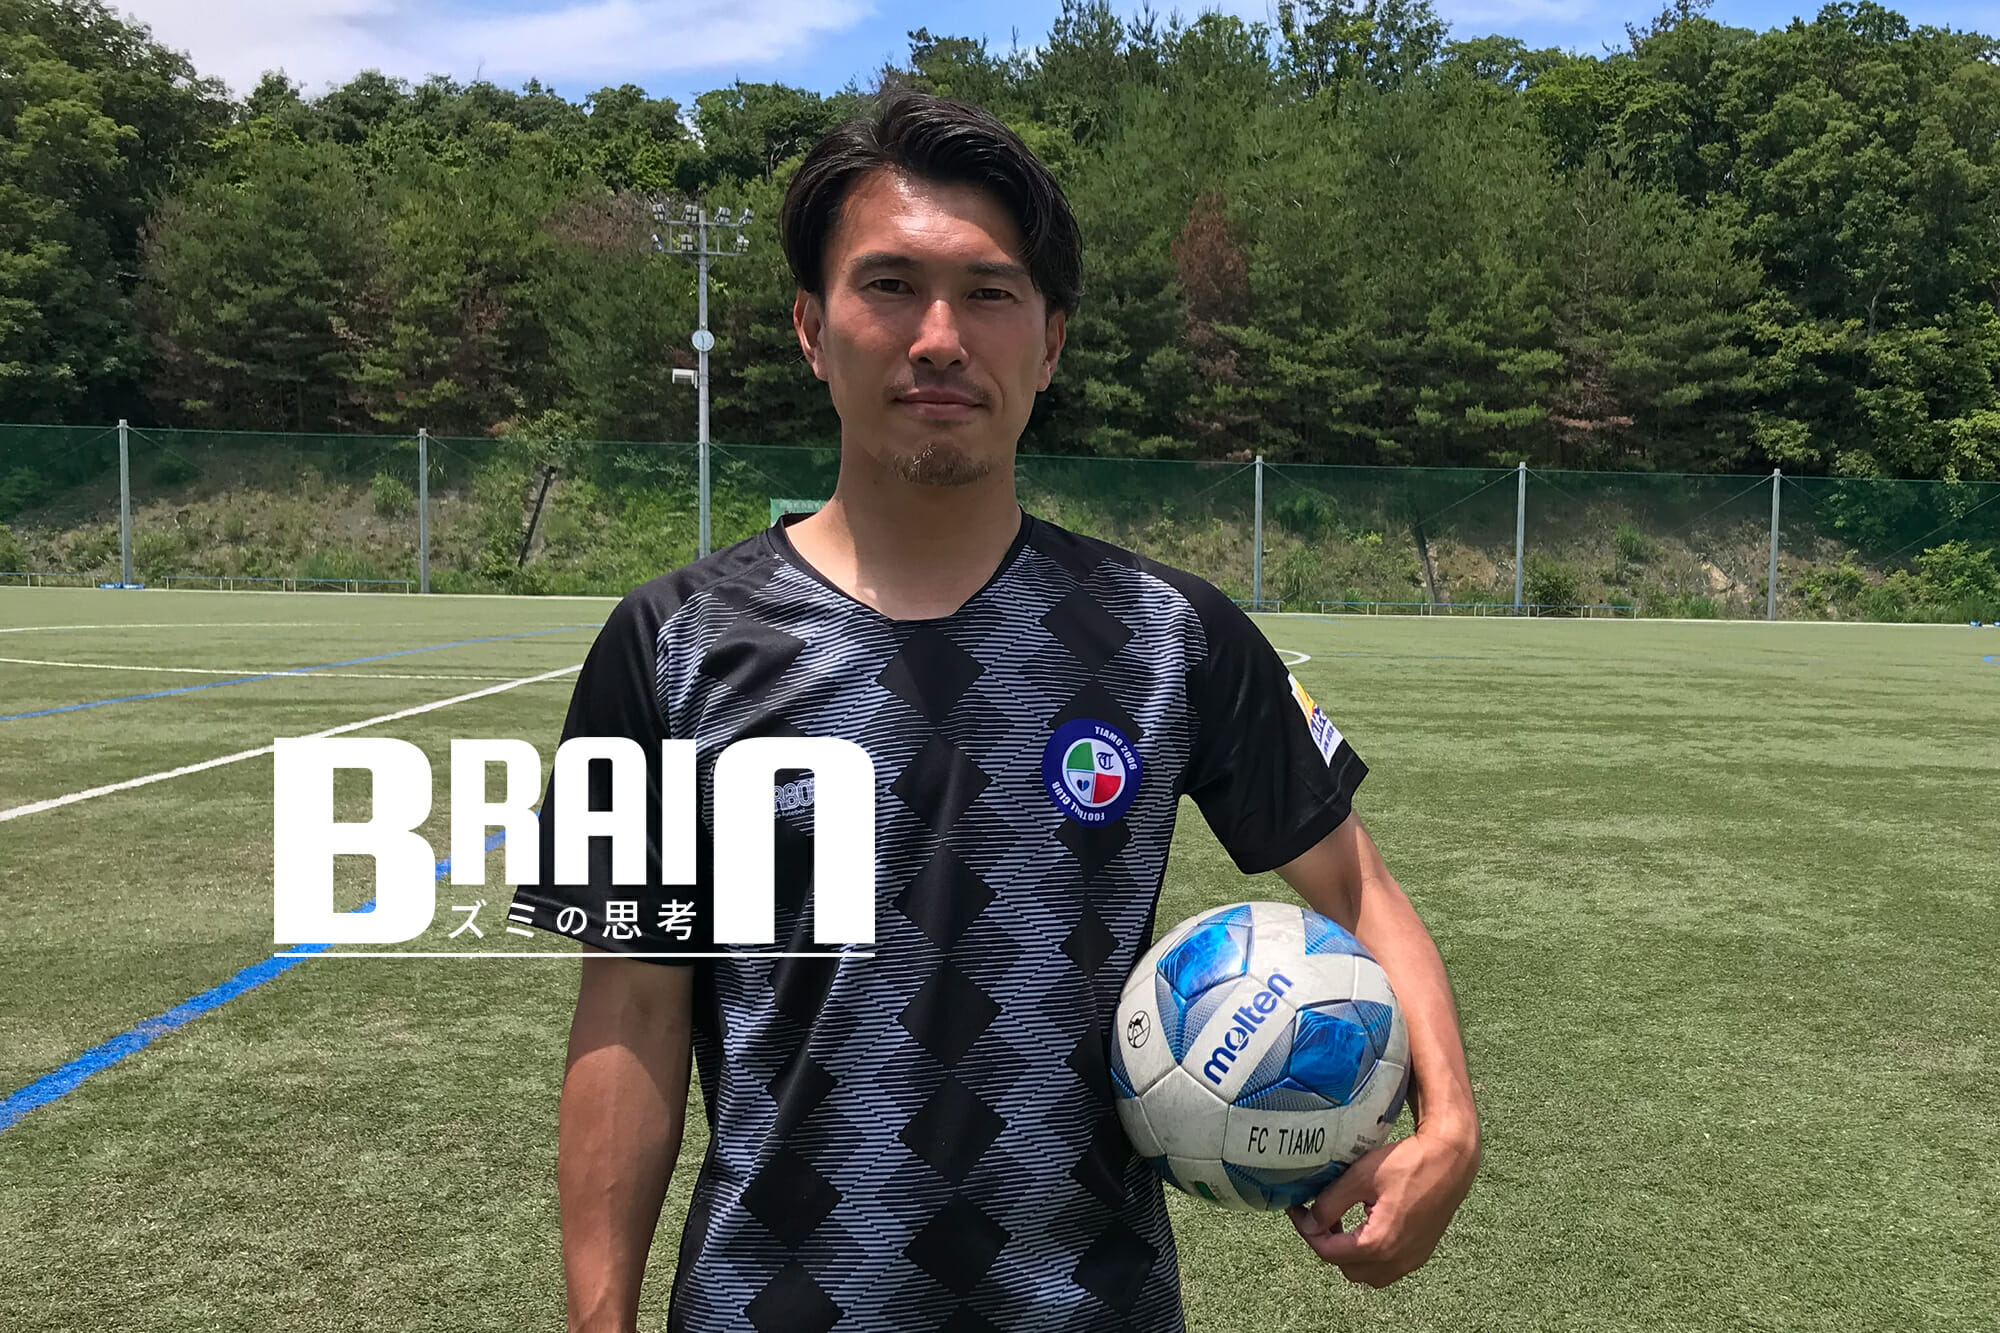 Vol 6 外から見る 今年のjリーグ 小川佳純 Reibola 新しいサッカーメディア